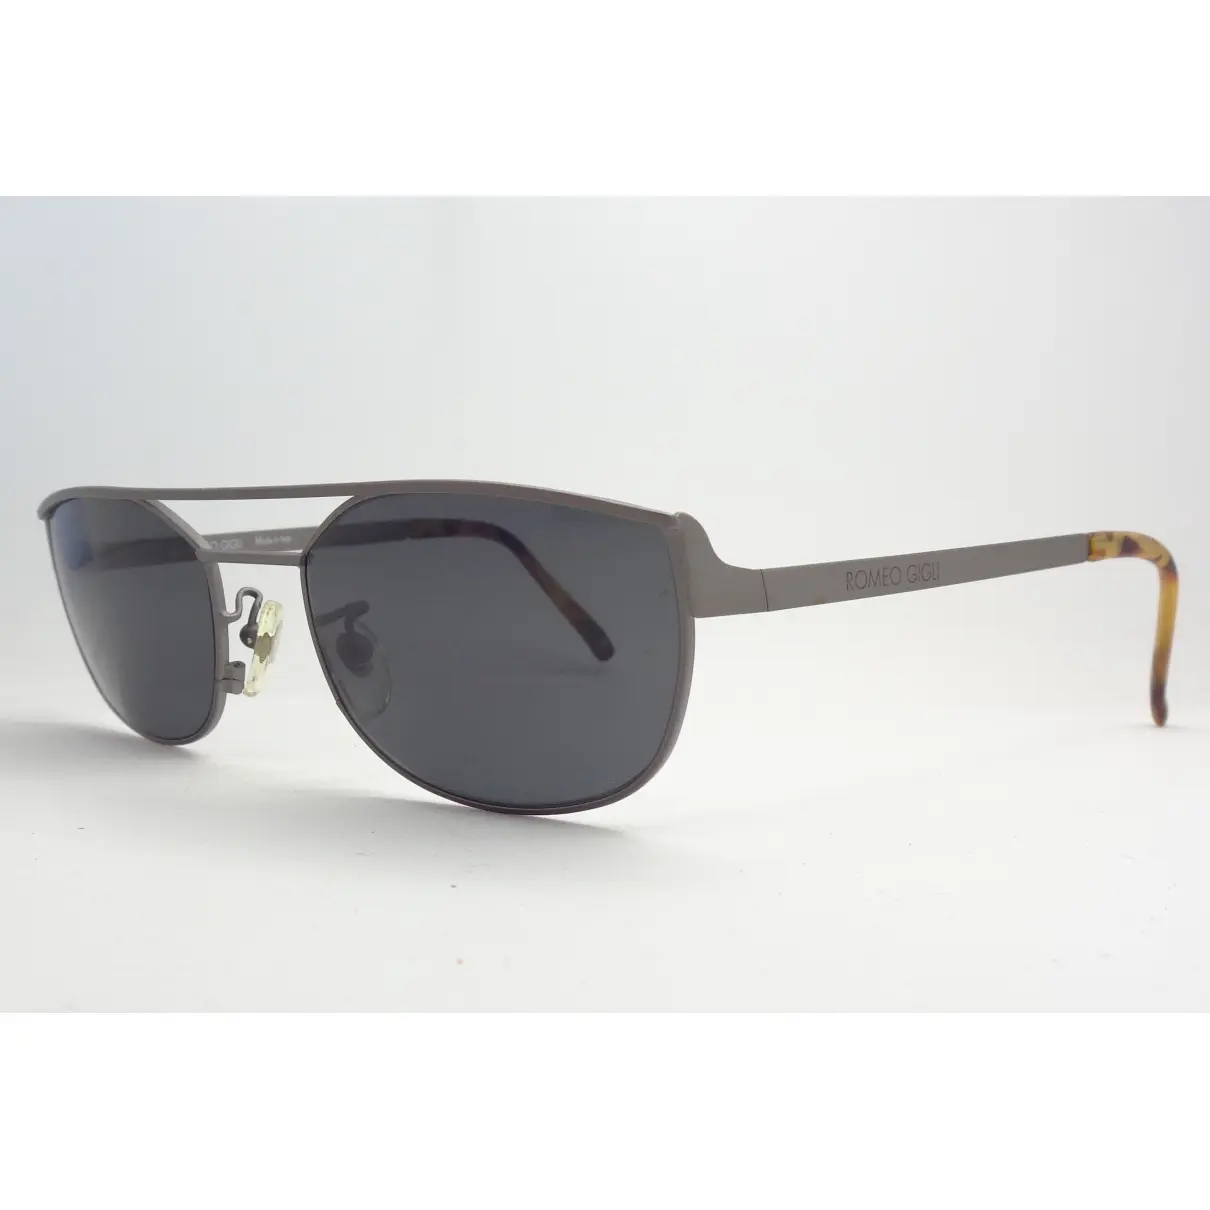 Buy Romeo Gigli Sunglasses online - Vintage